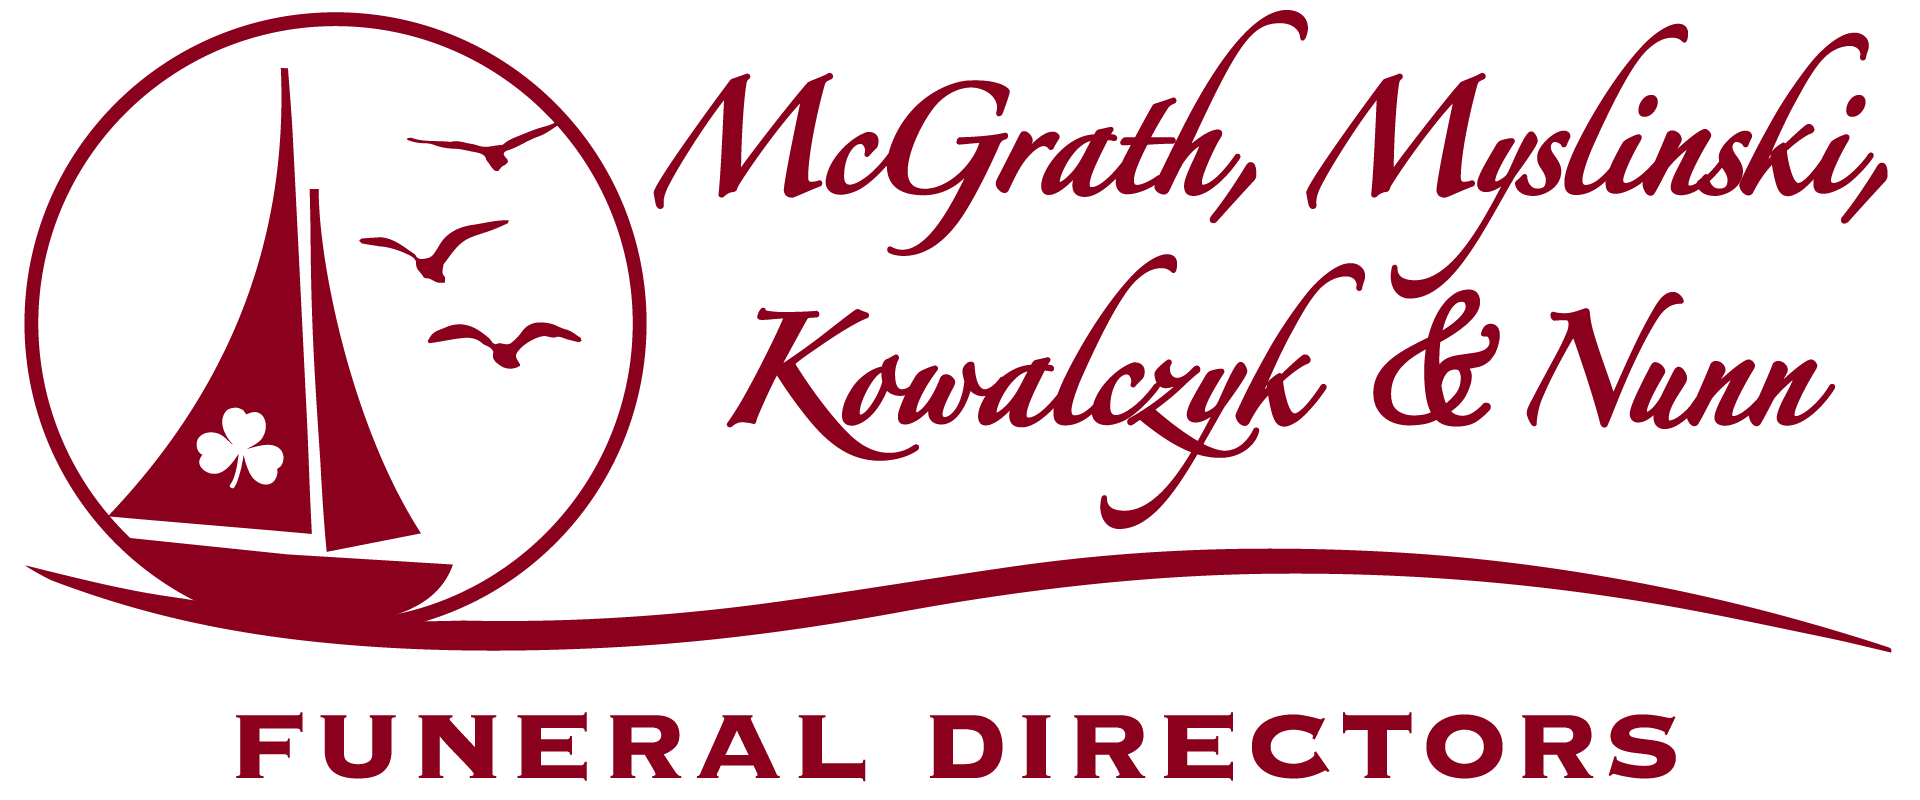 McGrath, Myslinksi, Kowalczyk and Nunn Funeral Directors Logo